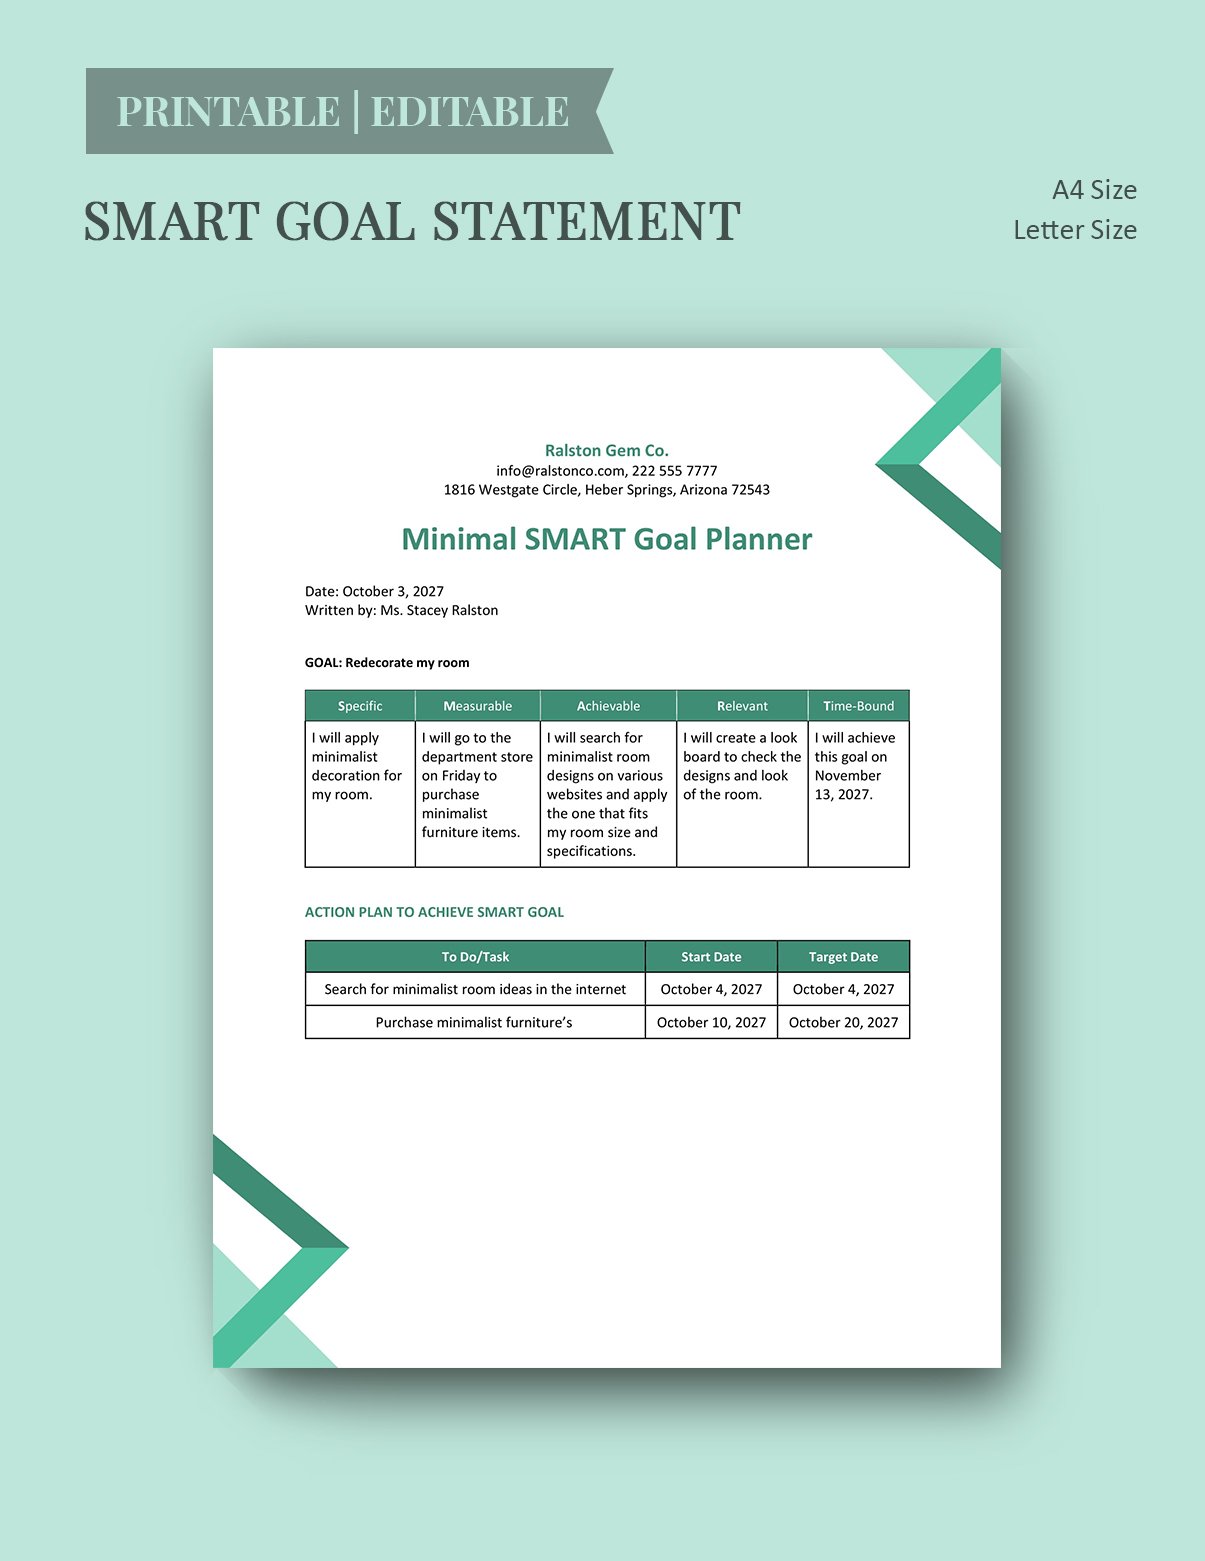 Minimal SMART Goal Planner Template